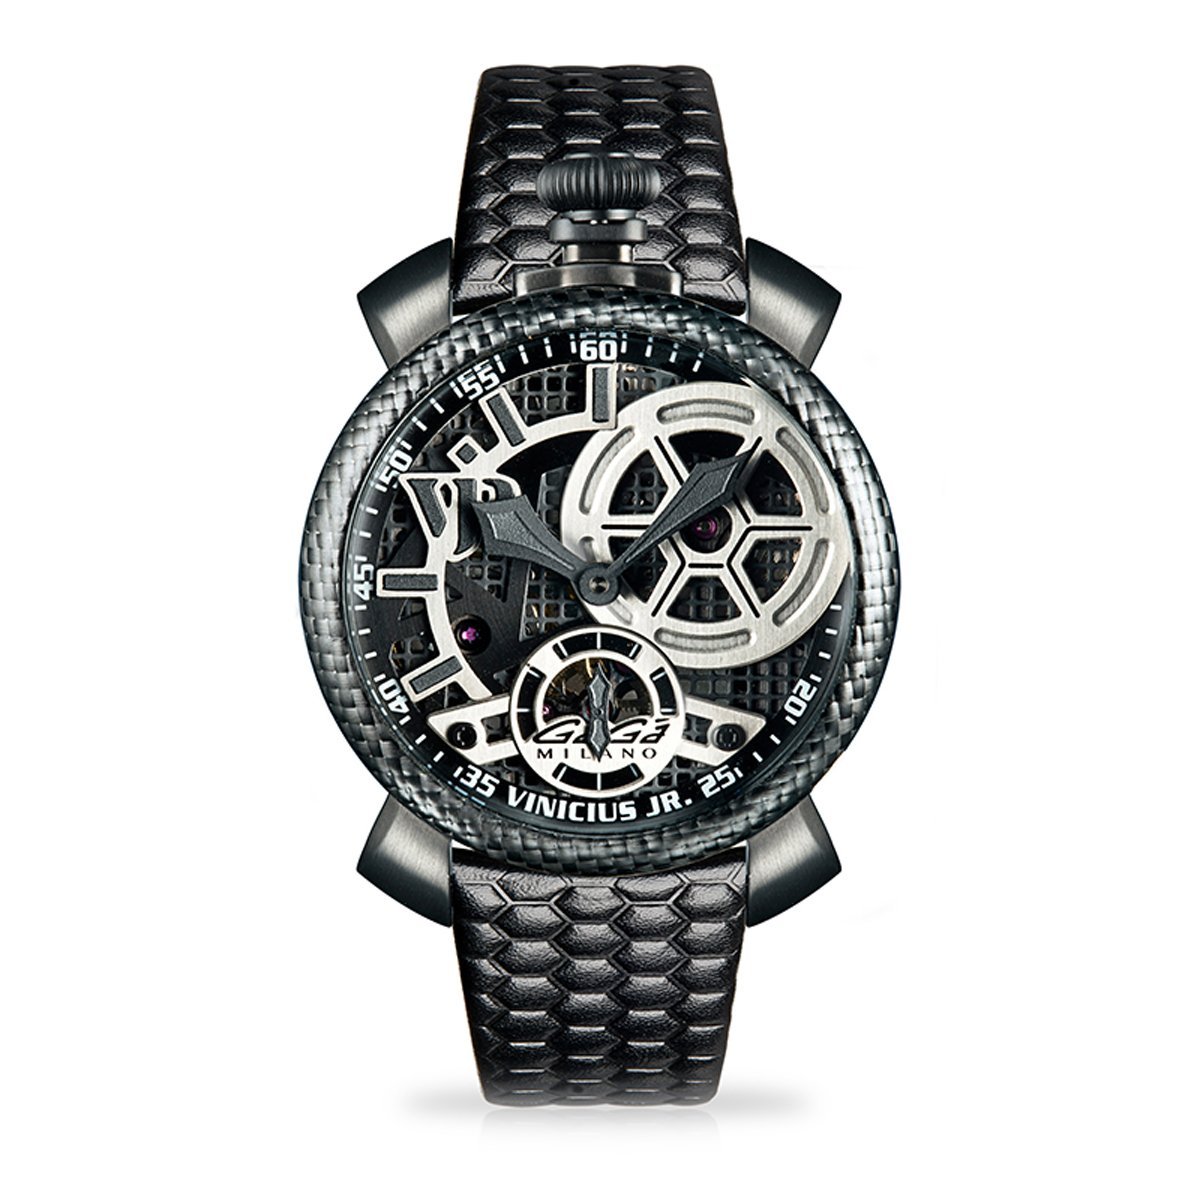 Gaga Milano Vinicious Jr. Skeleton Steel Limited Edition - Watches & Crystals